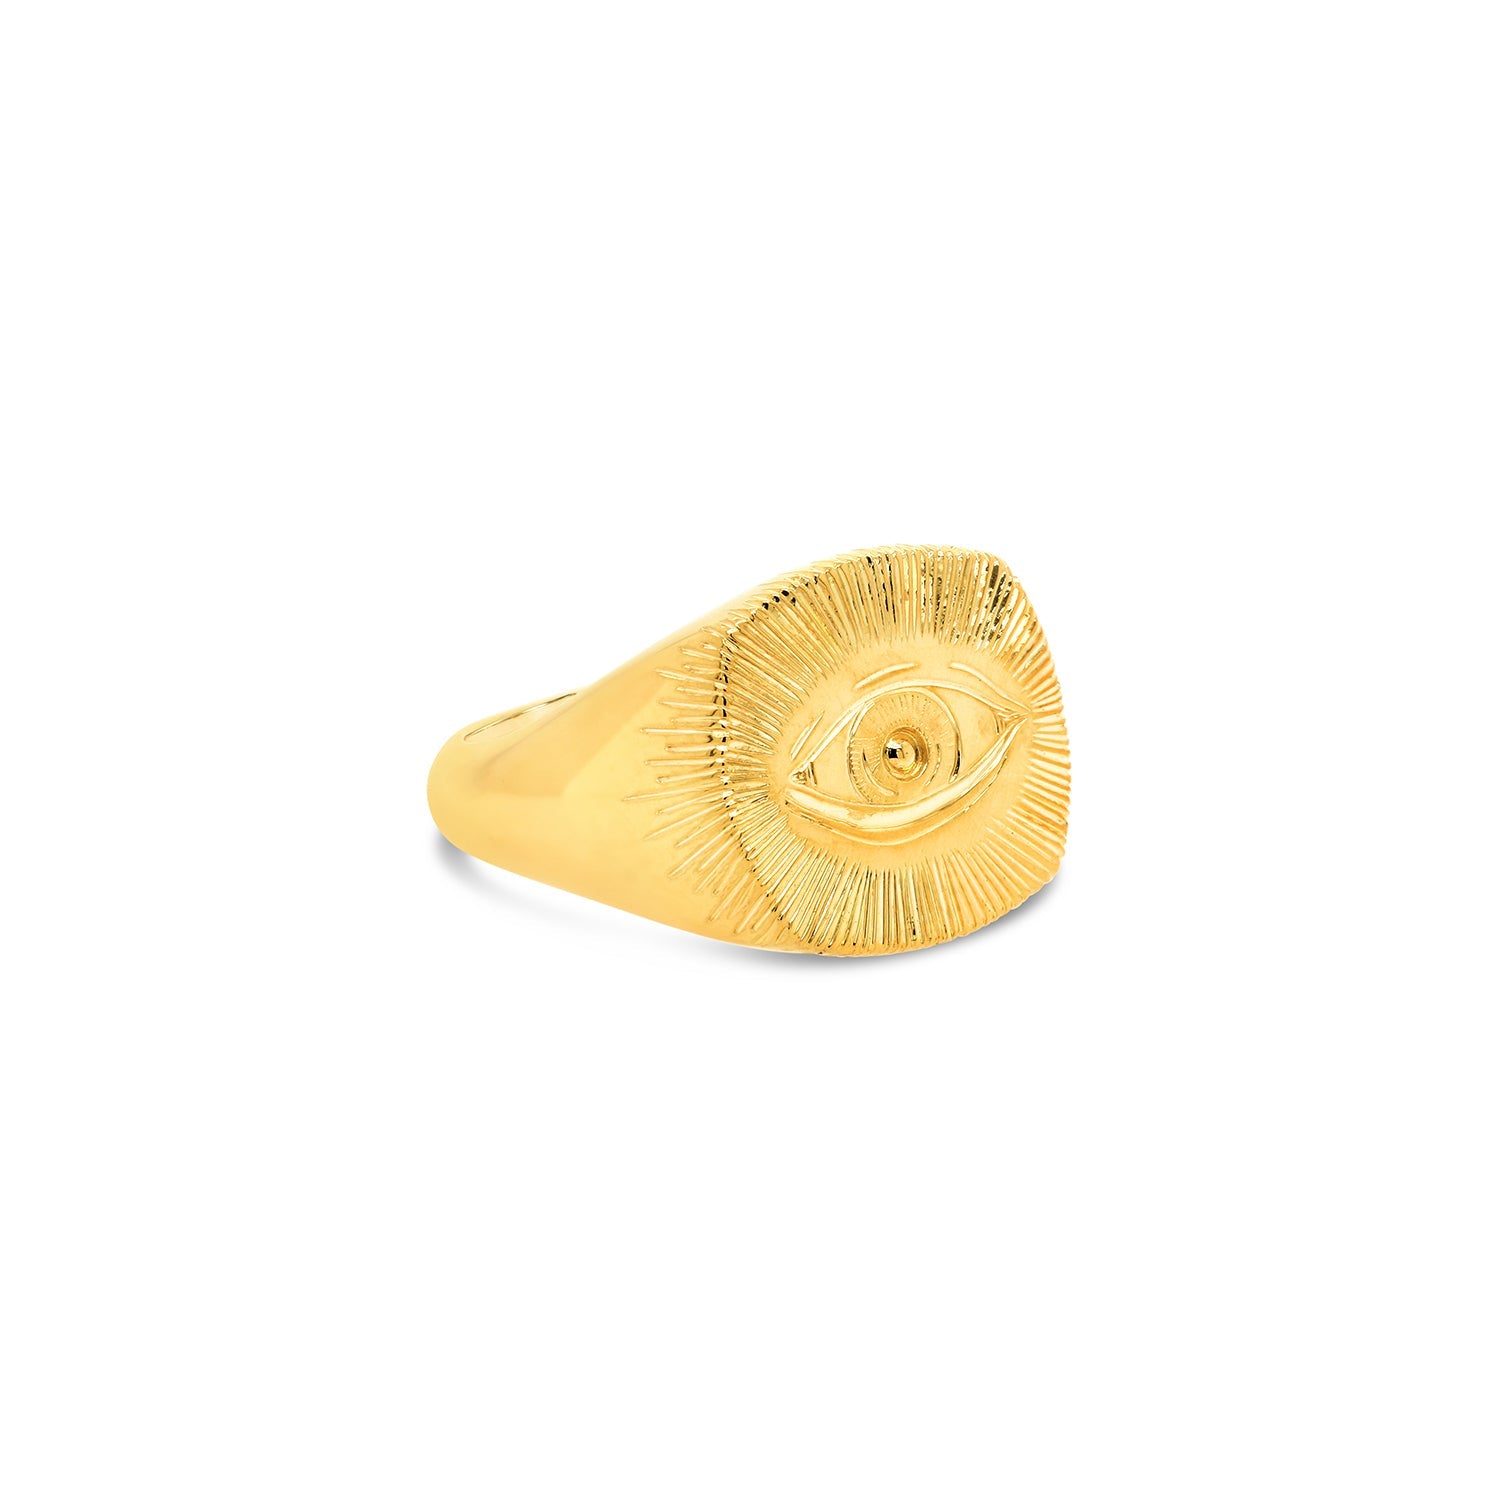 Cushion Gold Signet Ring